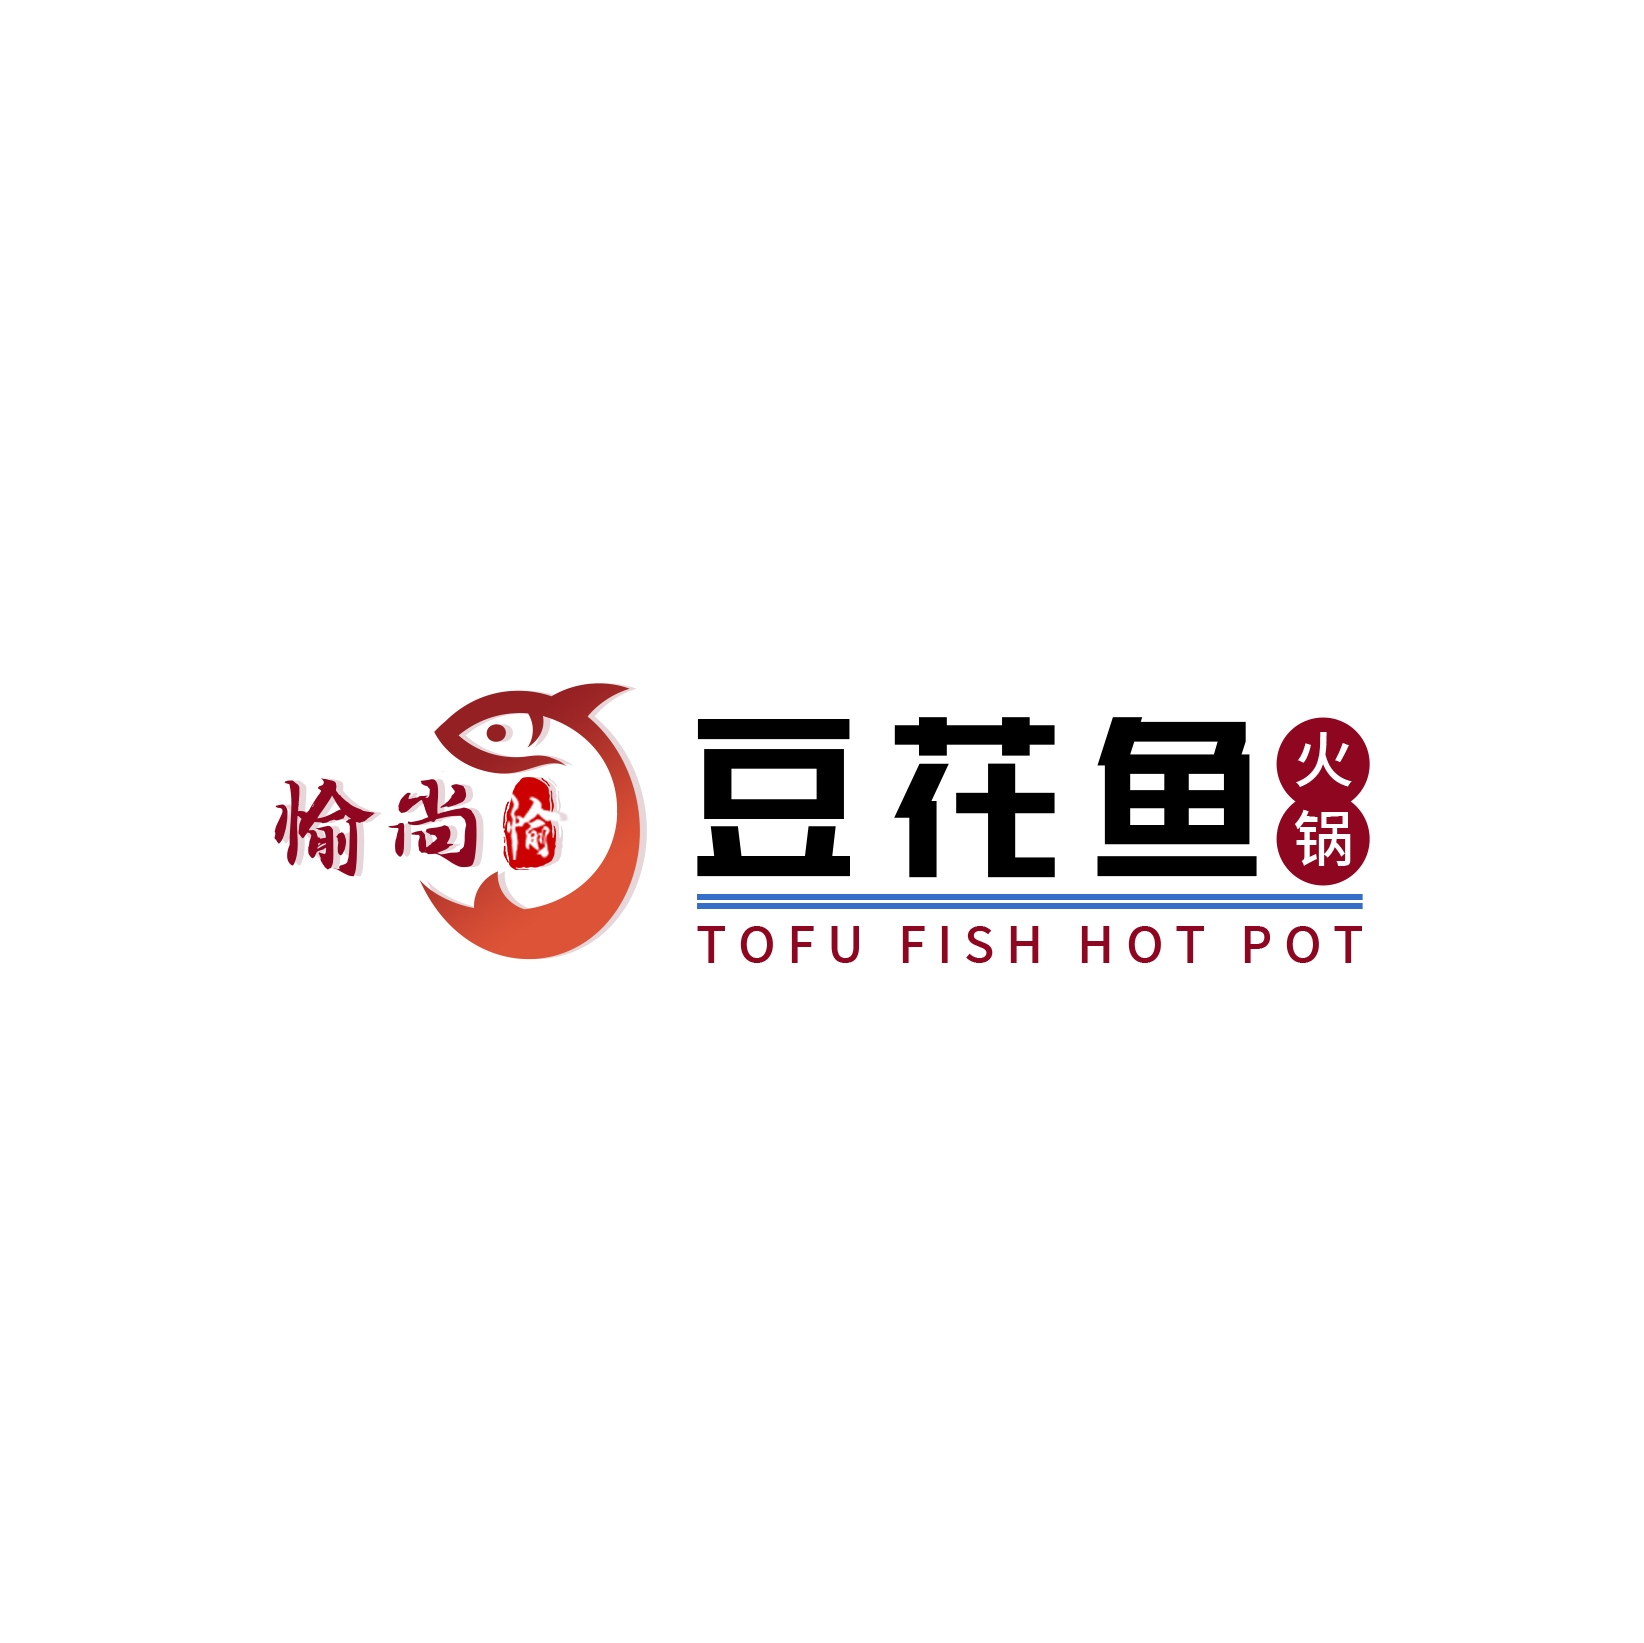  Yushangyu Hot Pot Fish